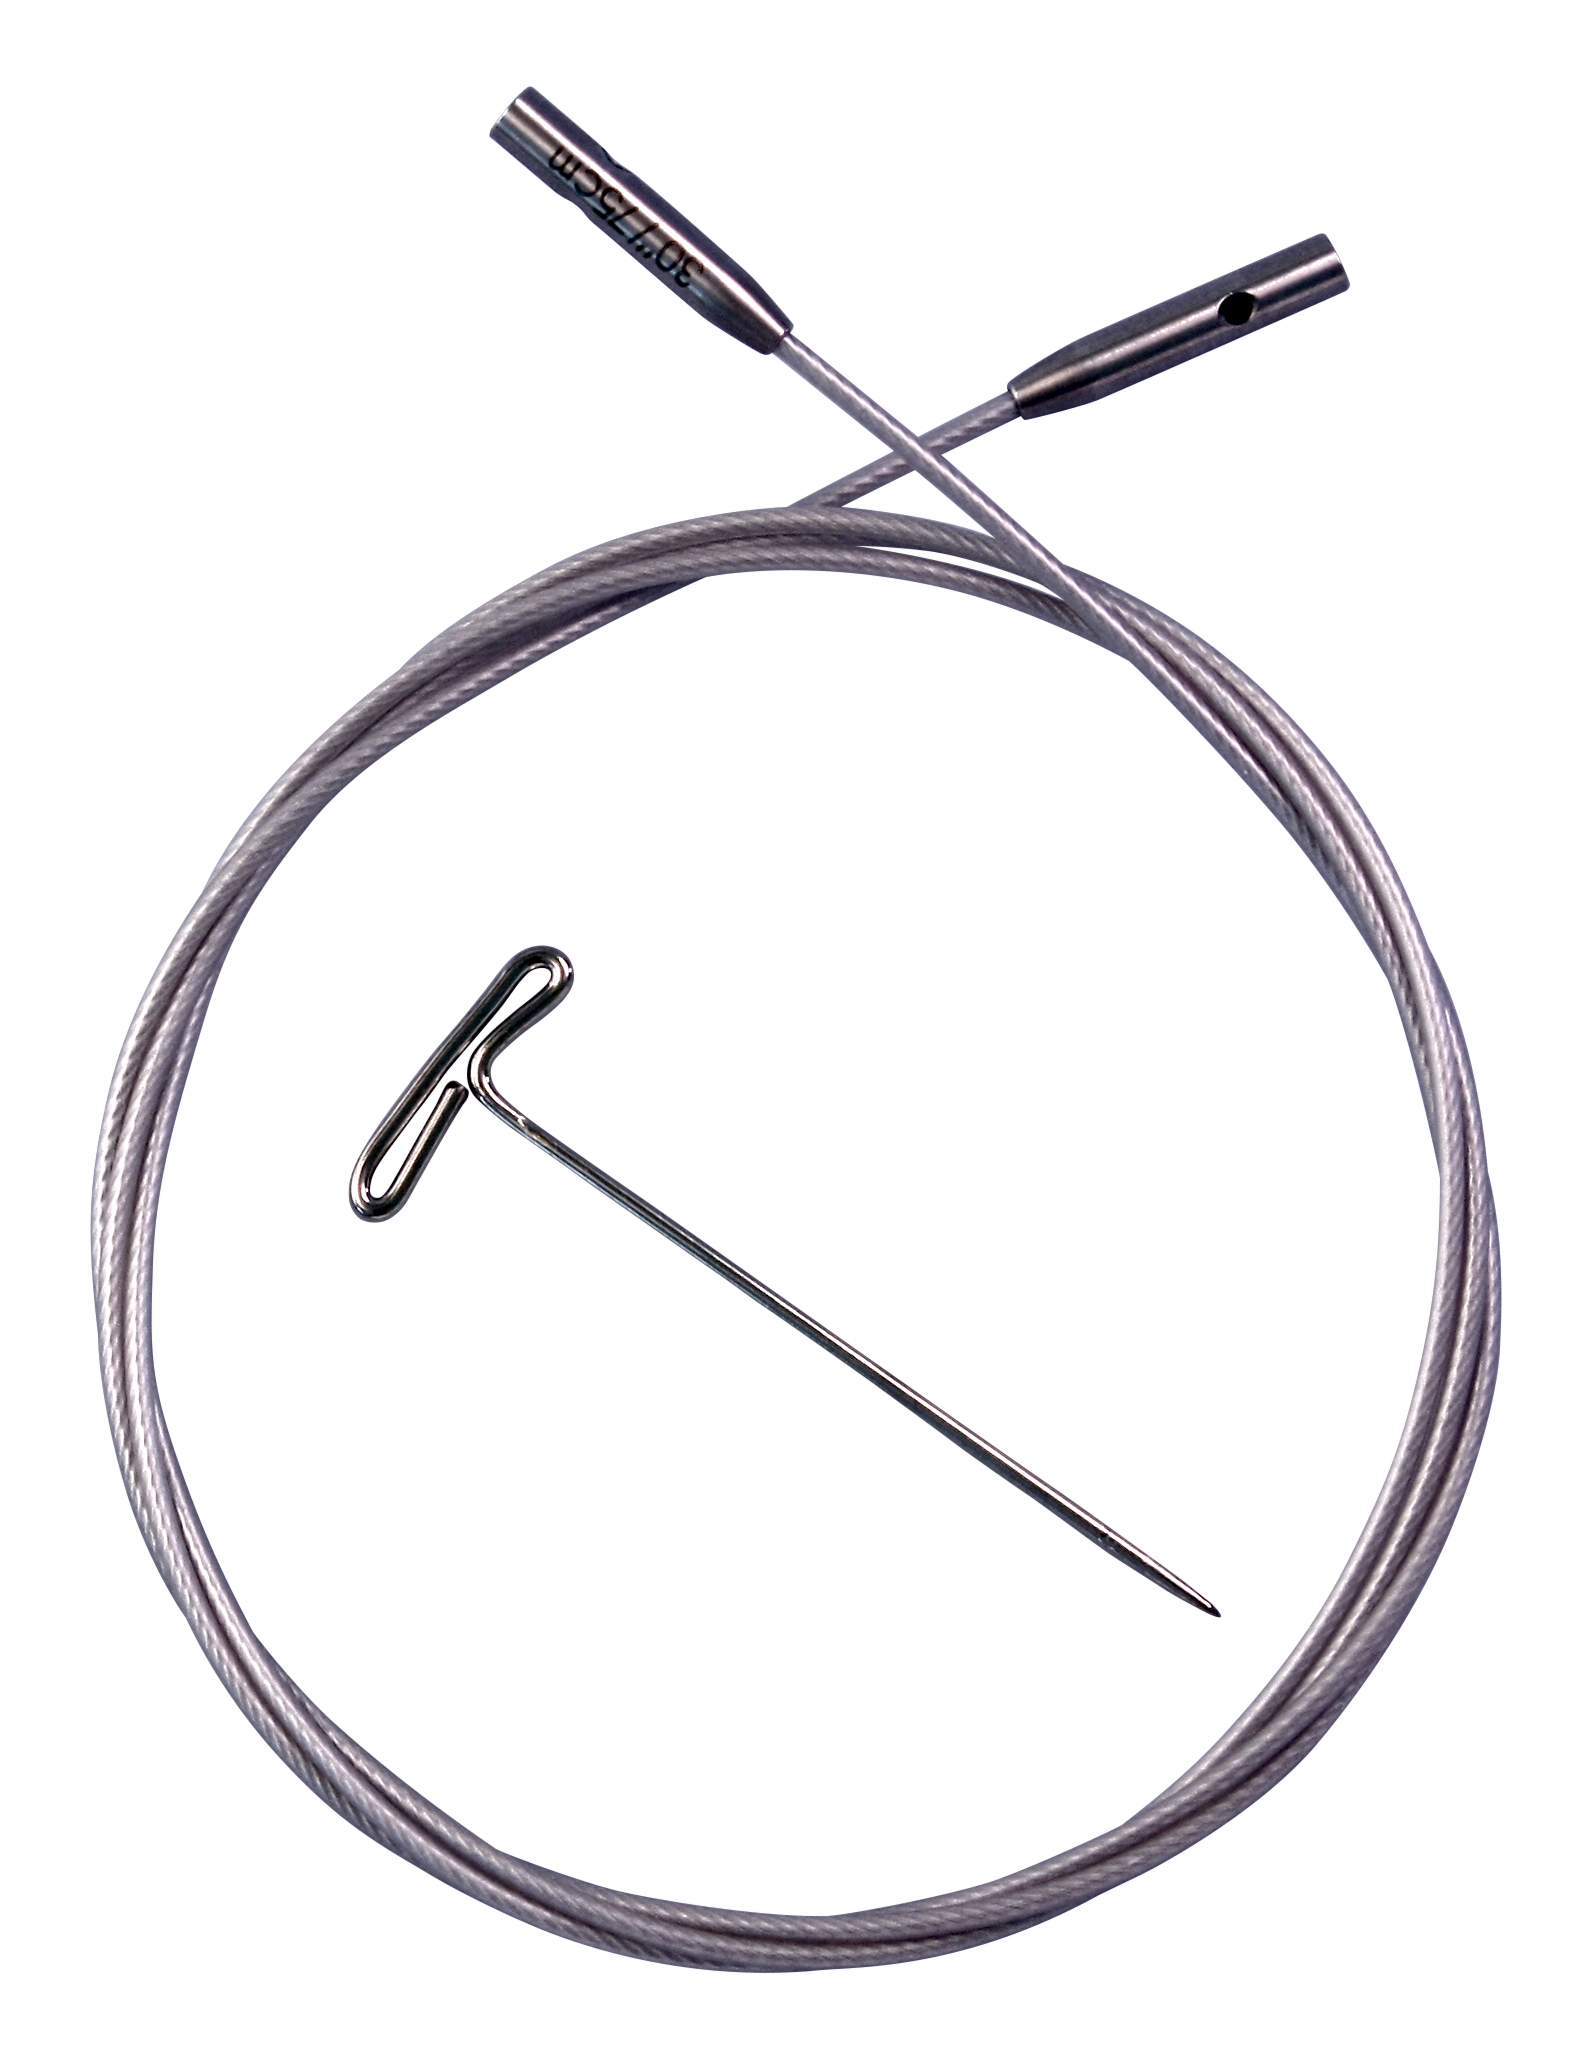 ChiaoGoo US15 (10mm) - 47 Circular Knitting Needles